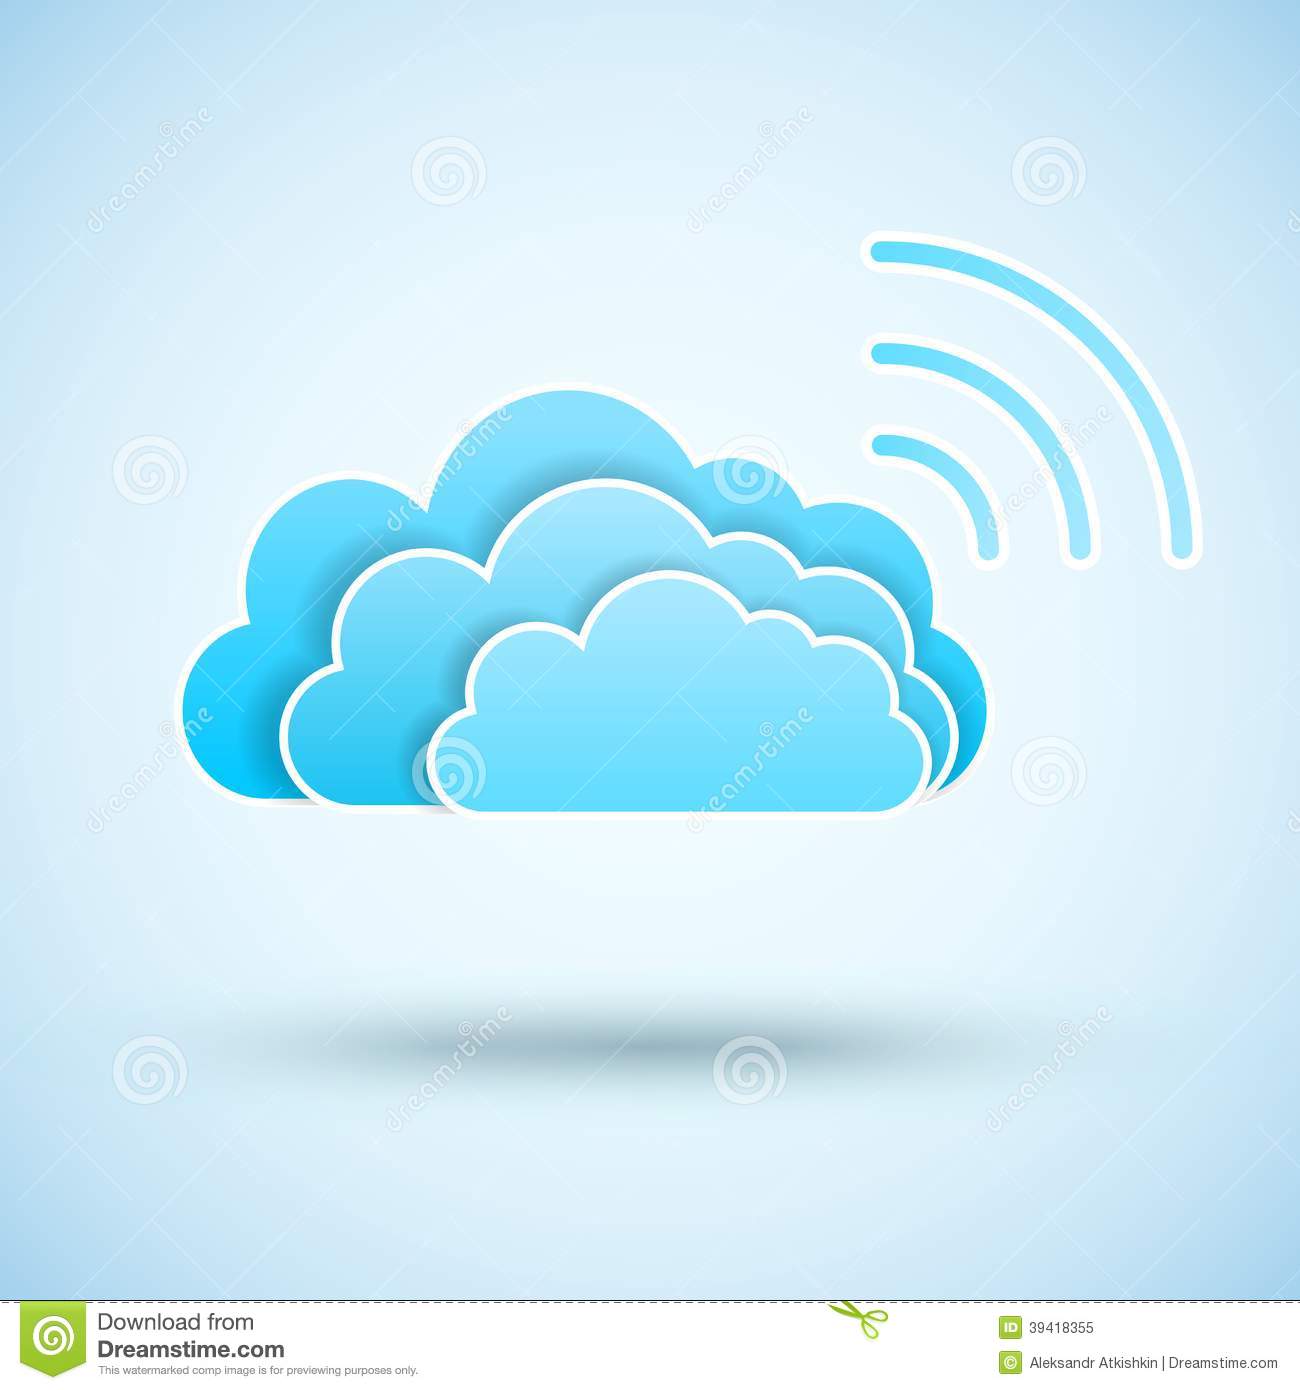 Cloud Network Icons Symbols